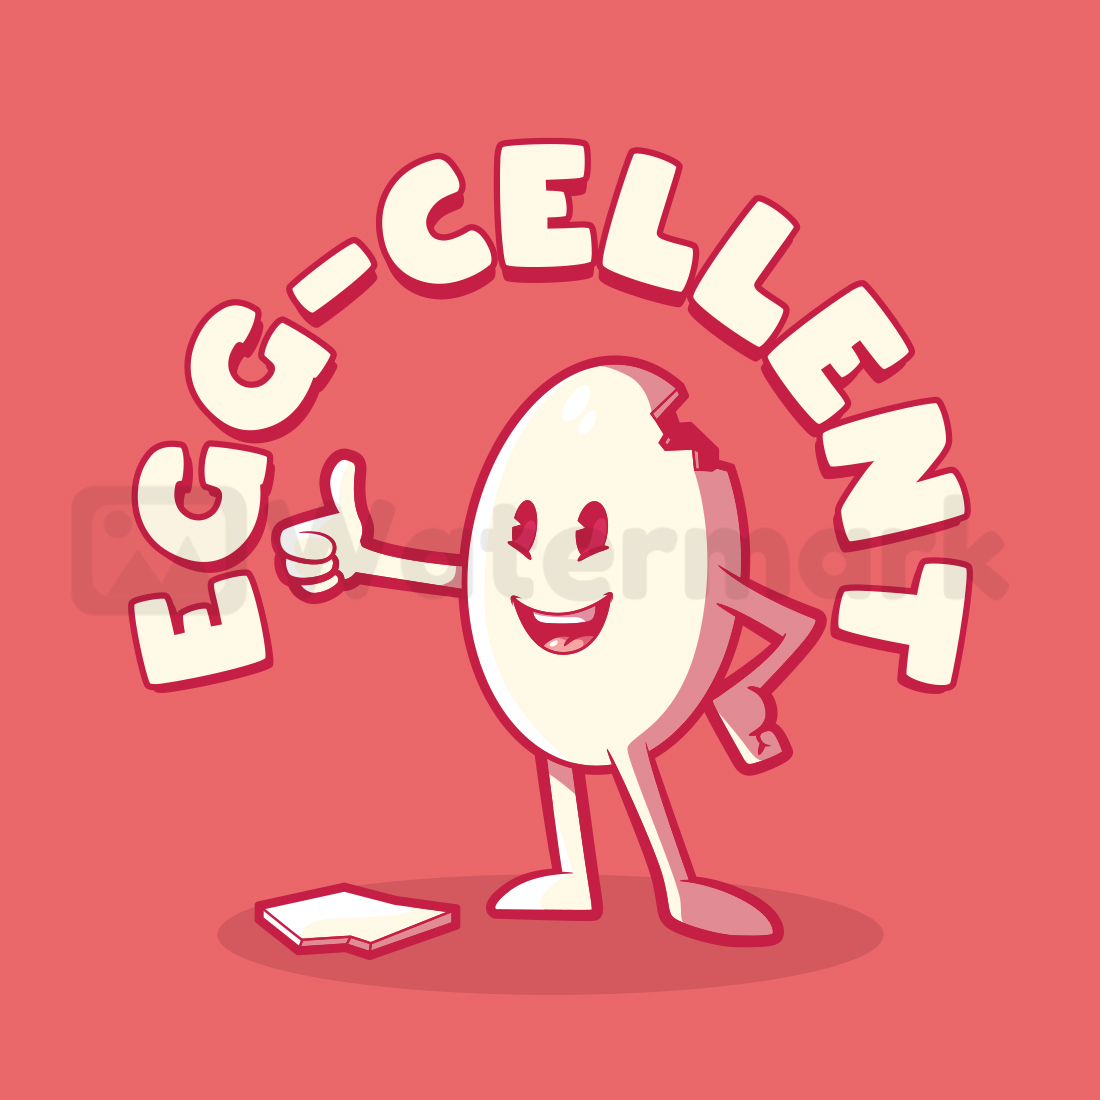 Egg Cellent main cover